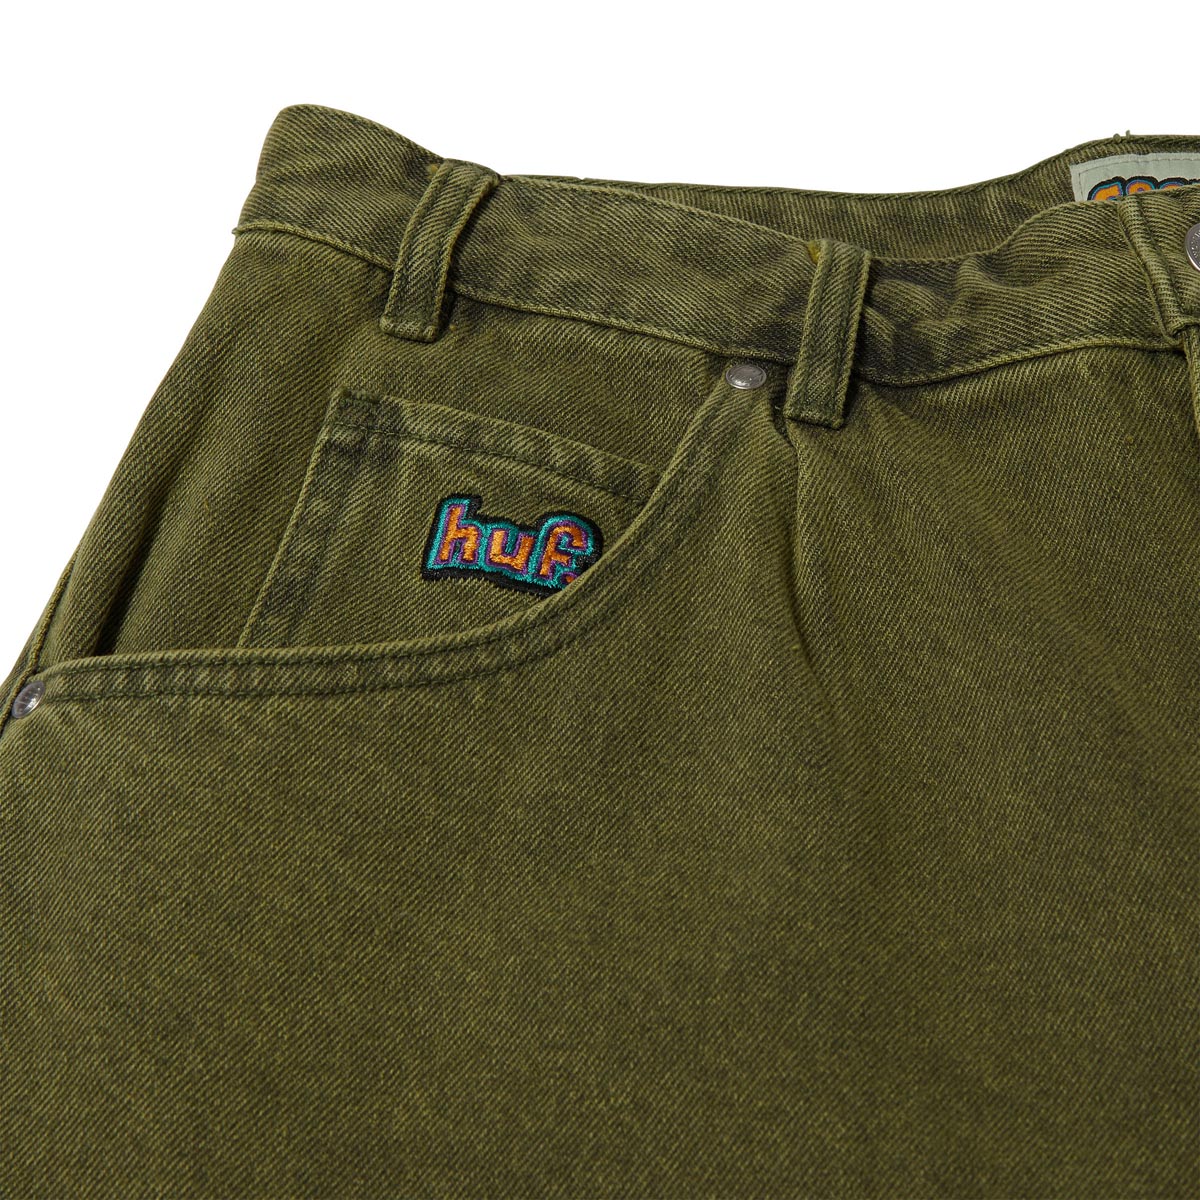 HUF Cromer Shorts - Dried Herb image 3